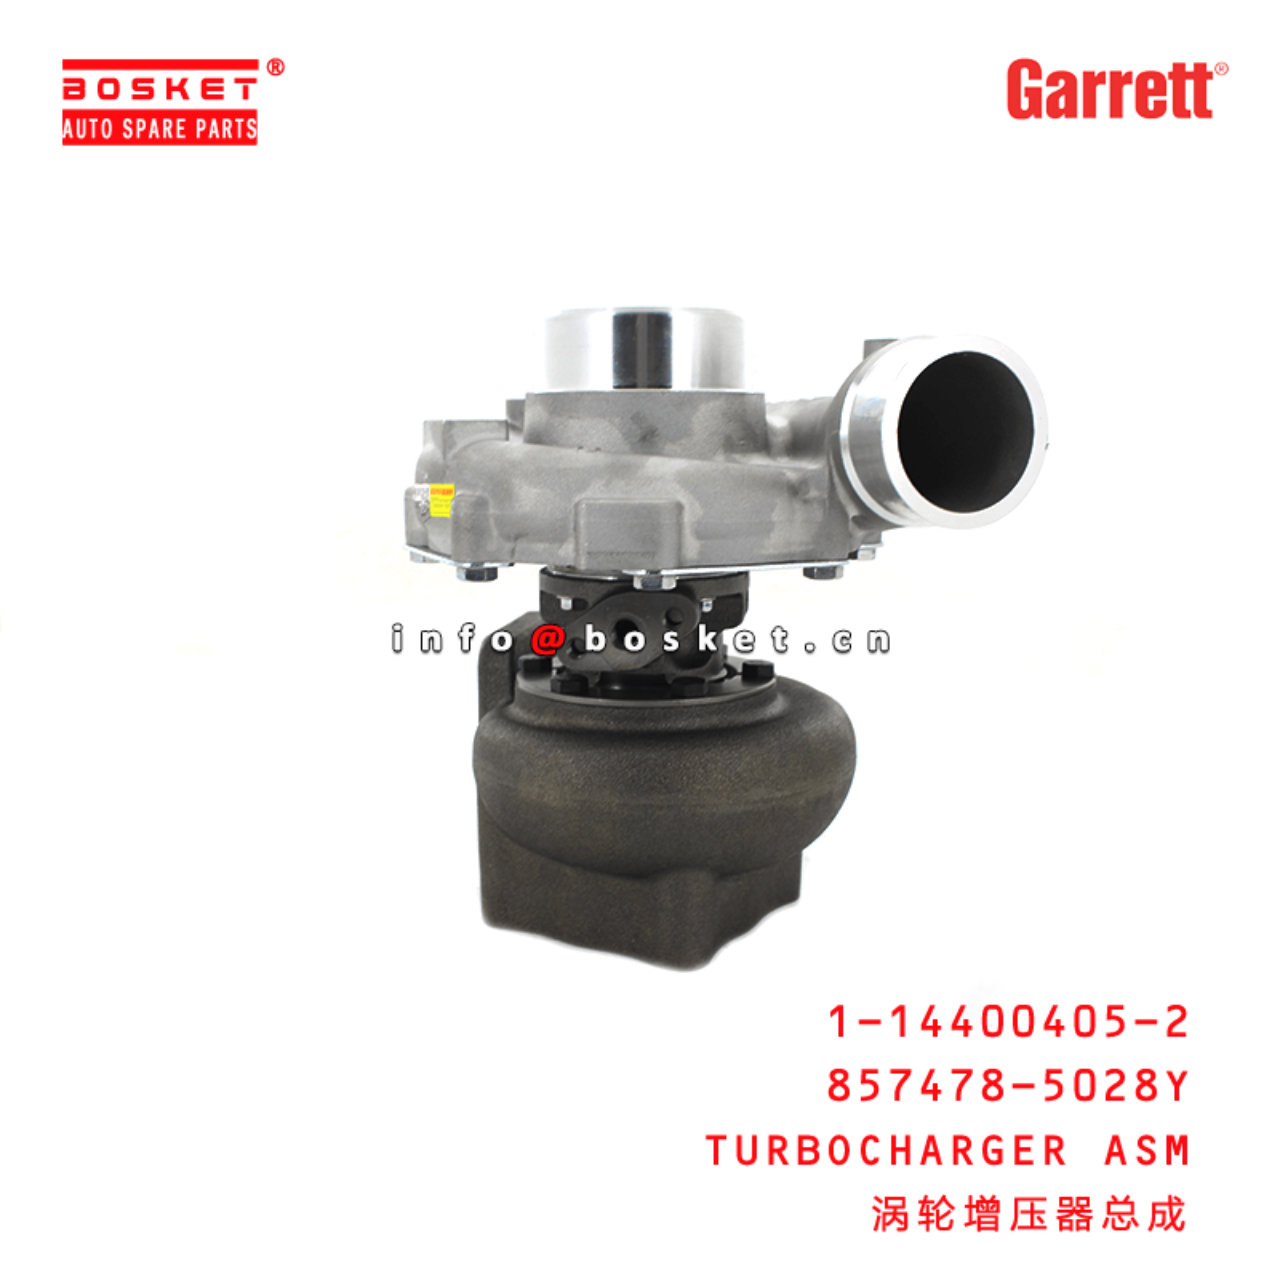 Garrett Genuine 857478-5028Y 1-14400405-2 Turbocharger Assembly Suitable for ISUZU XE 6HK1 